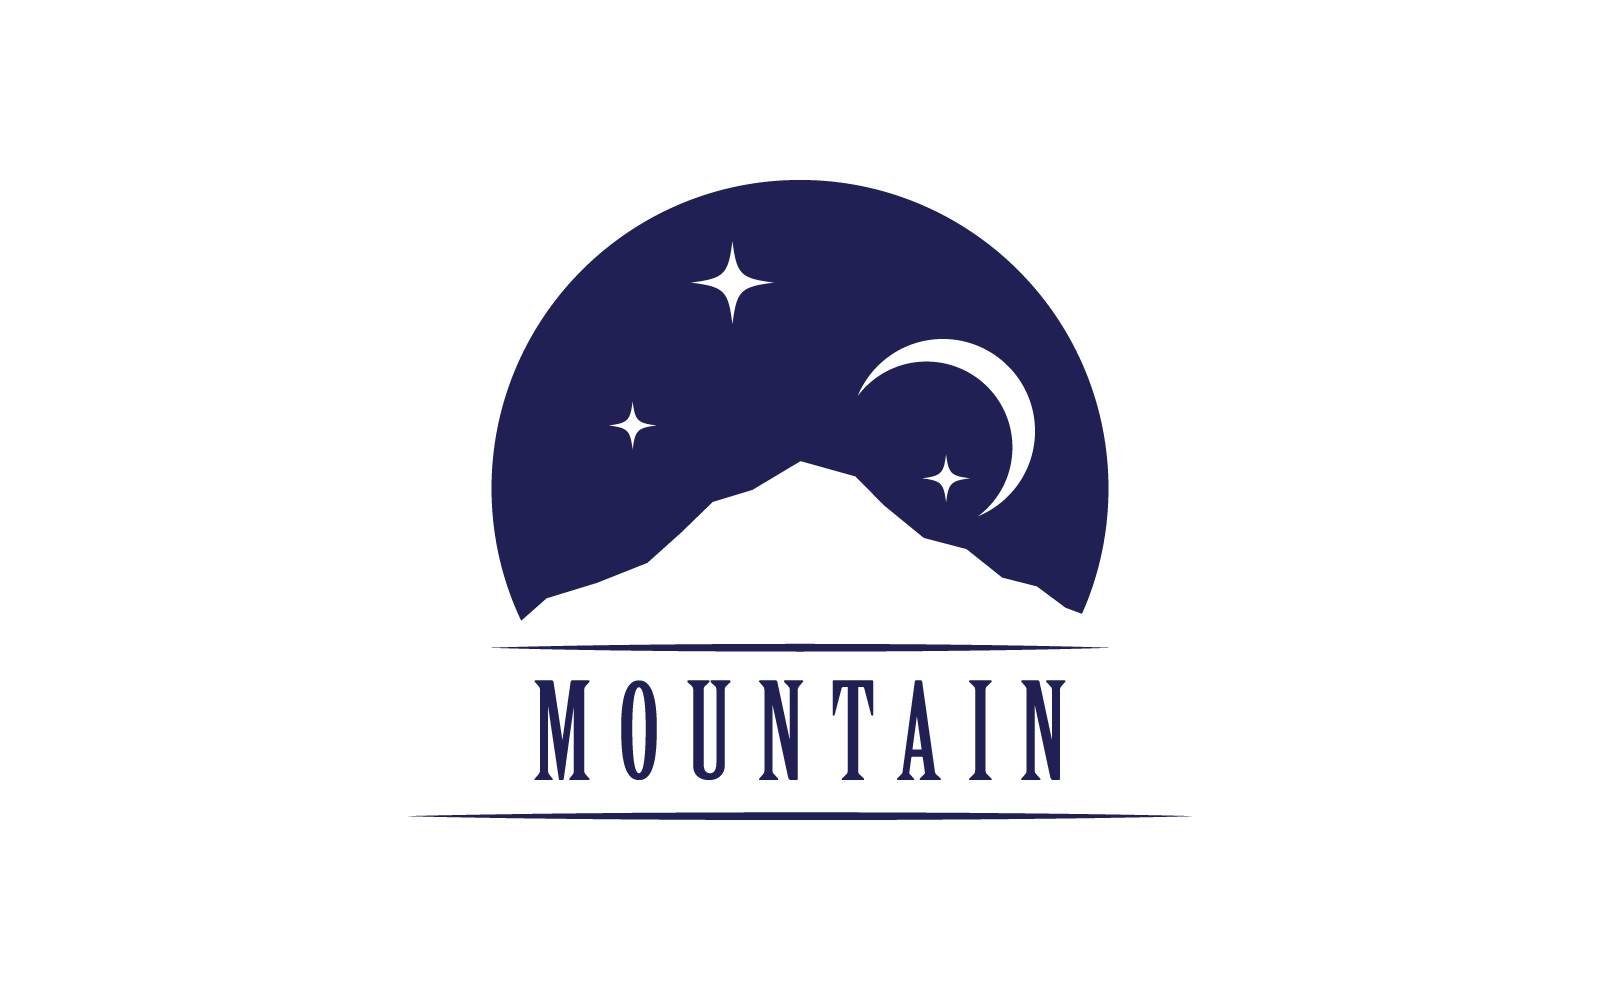 Mountain illustration vector design template